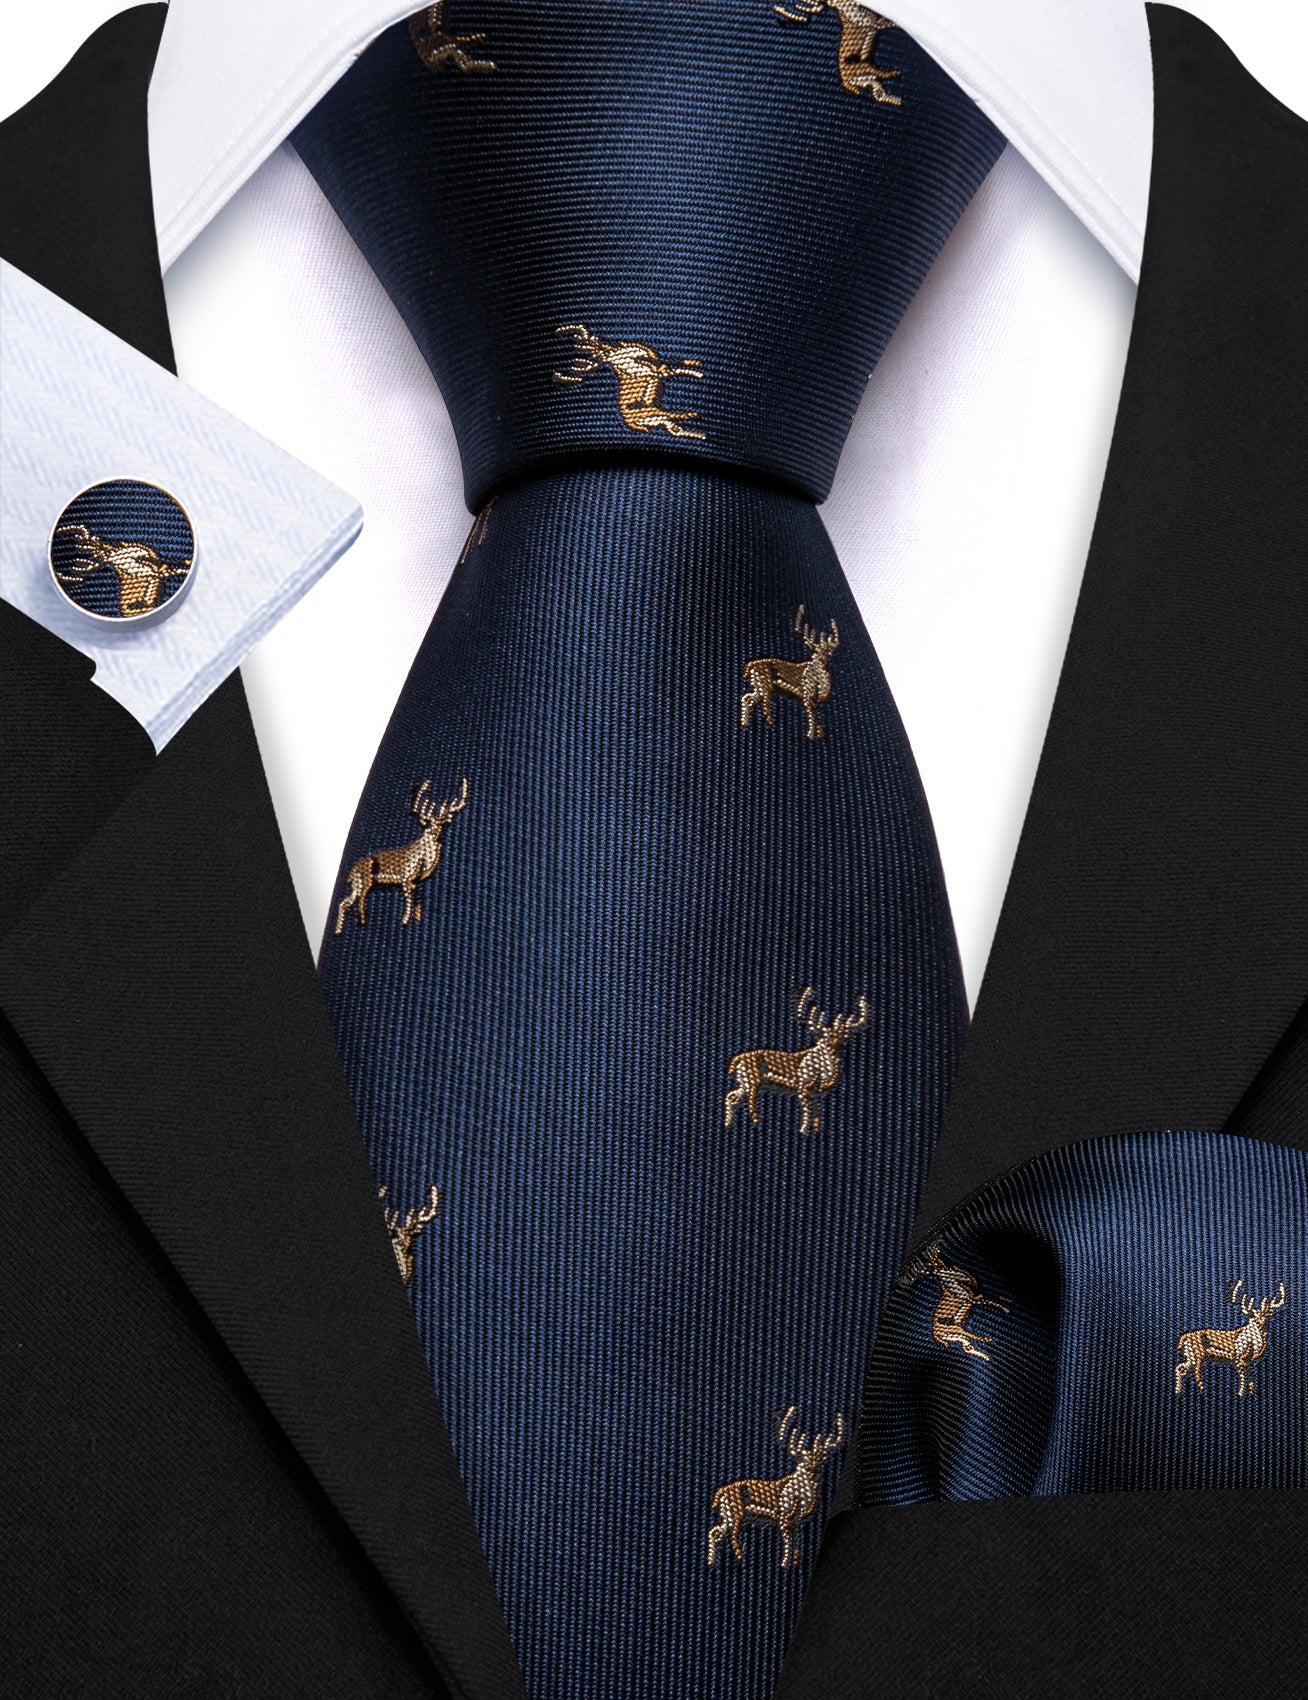 Deep Blue Deer Floral Silk Necktie Pocket Square Cufflinks Set